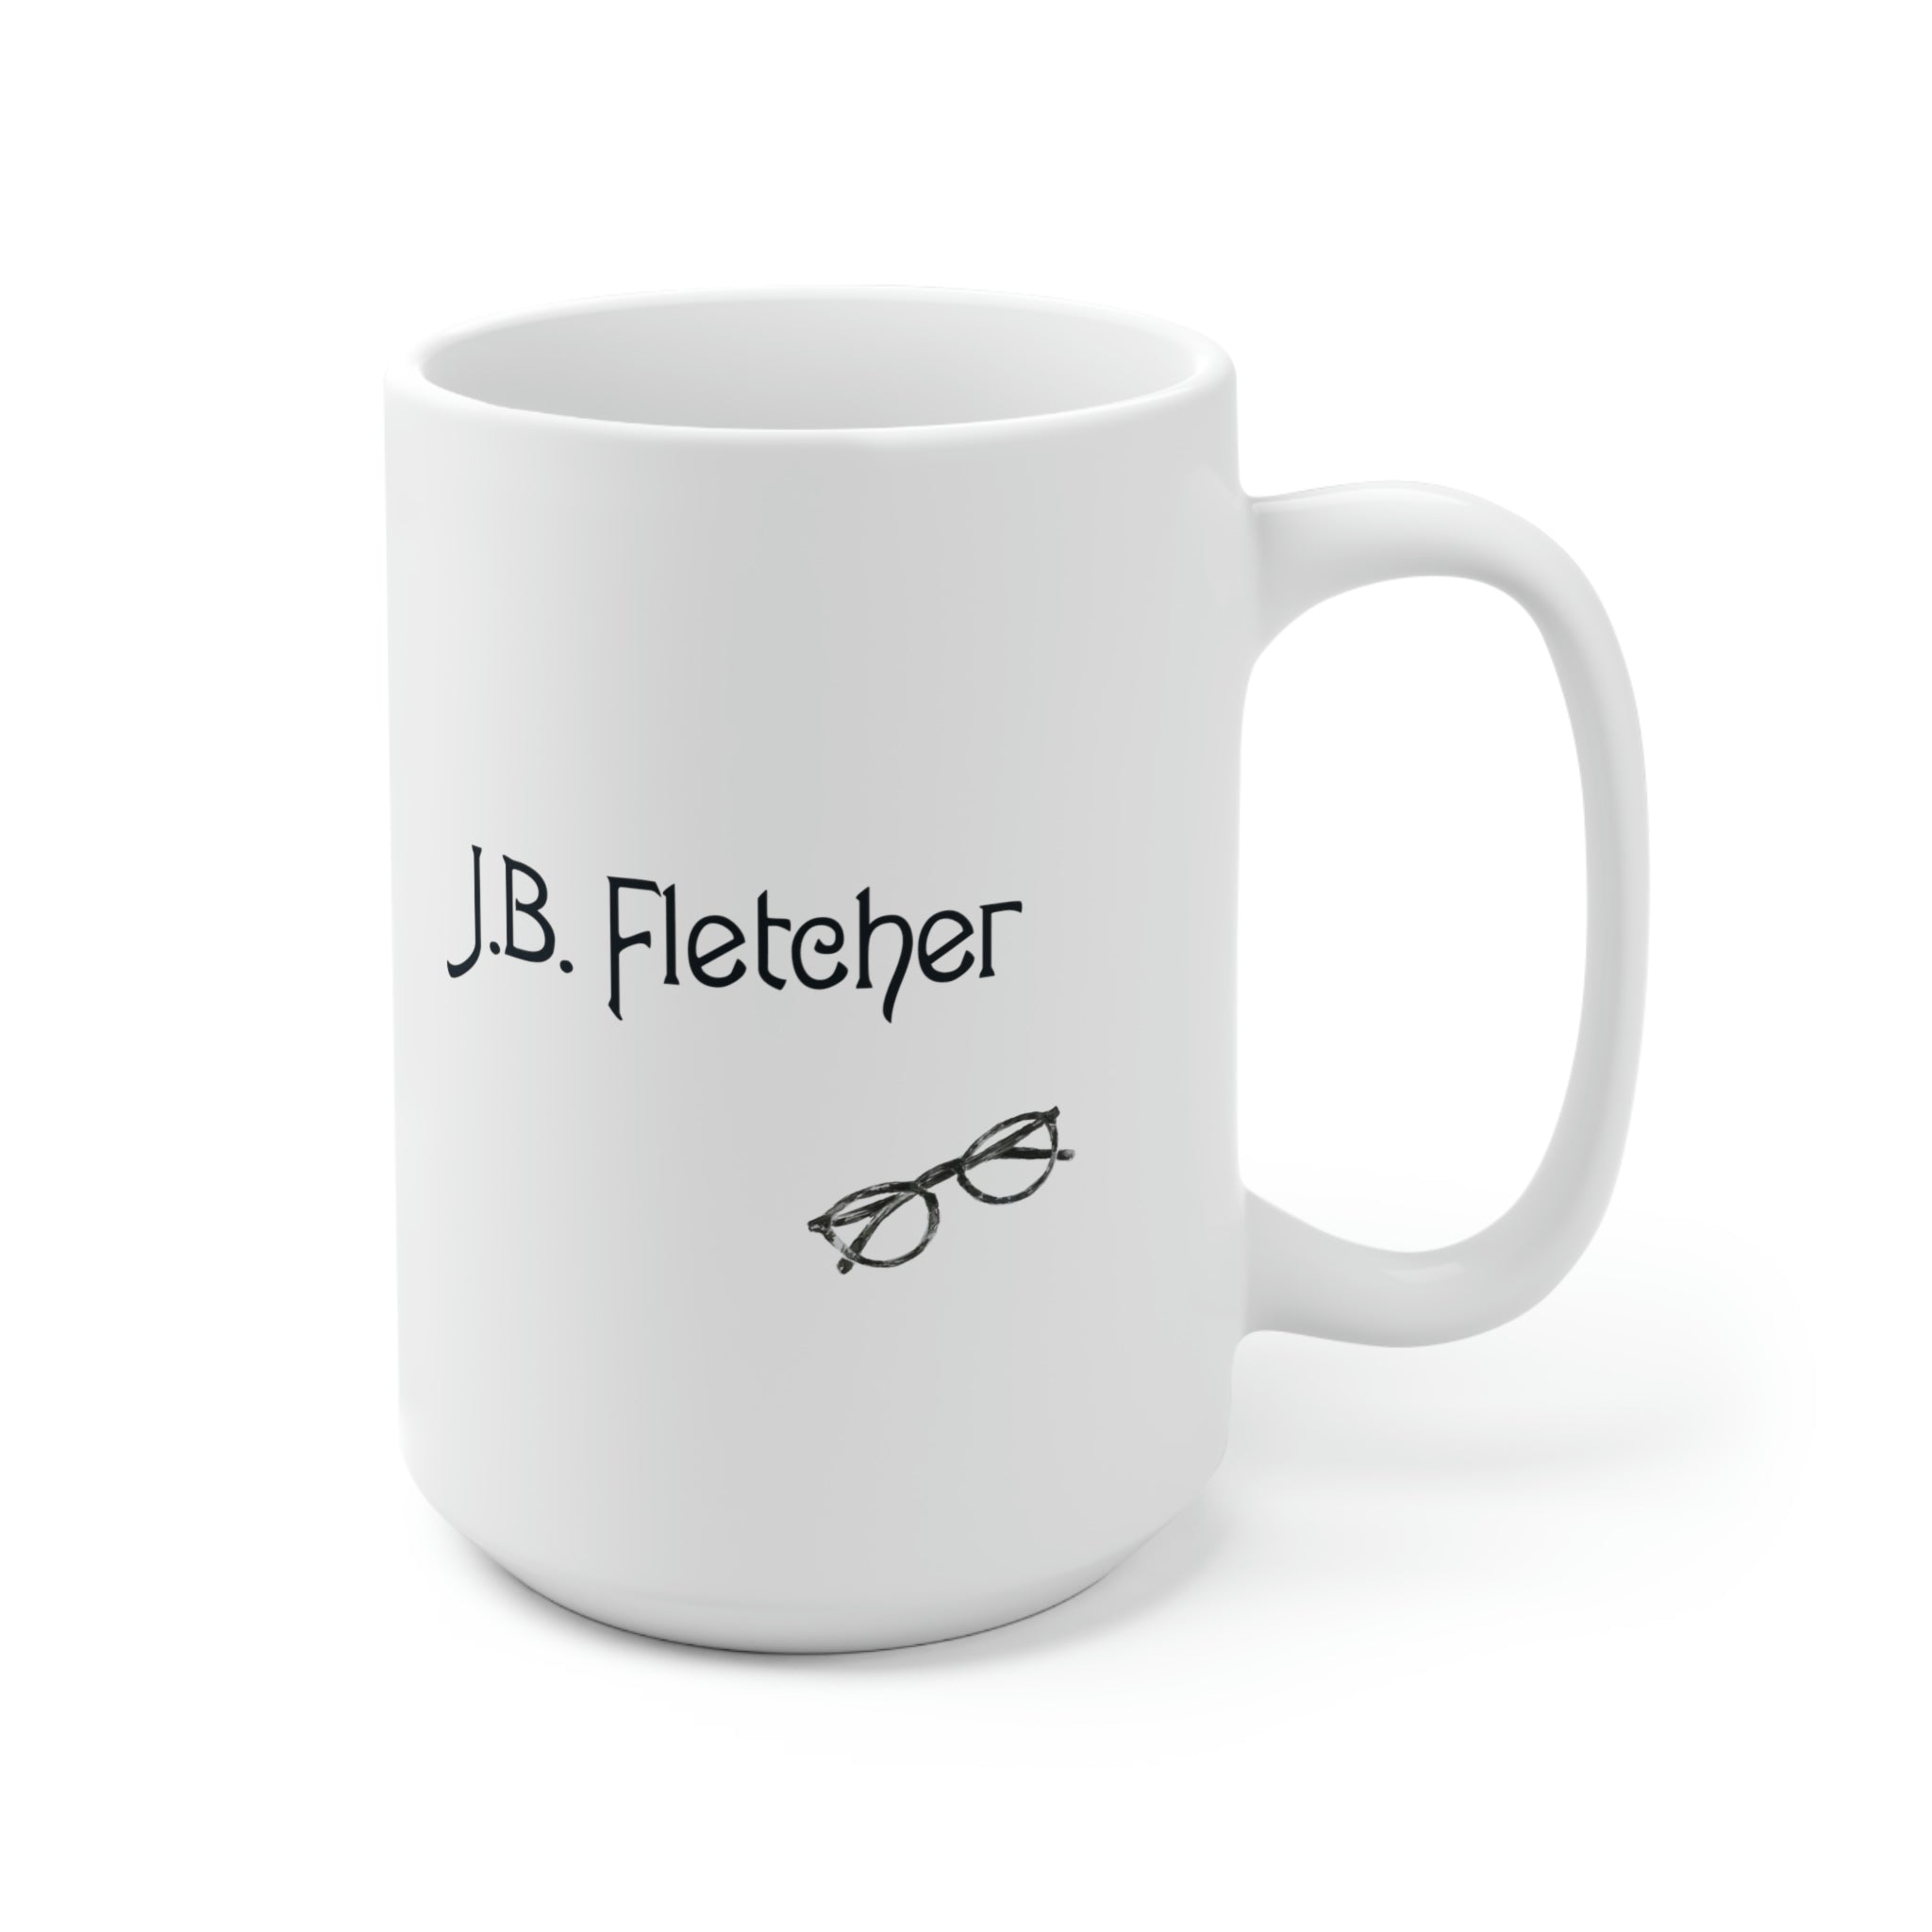 Jessica Fletcher Quote Large Coffee Mug, White 15 oz Side Showing JB Fletcher name and glasses